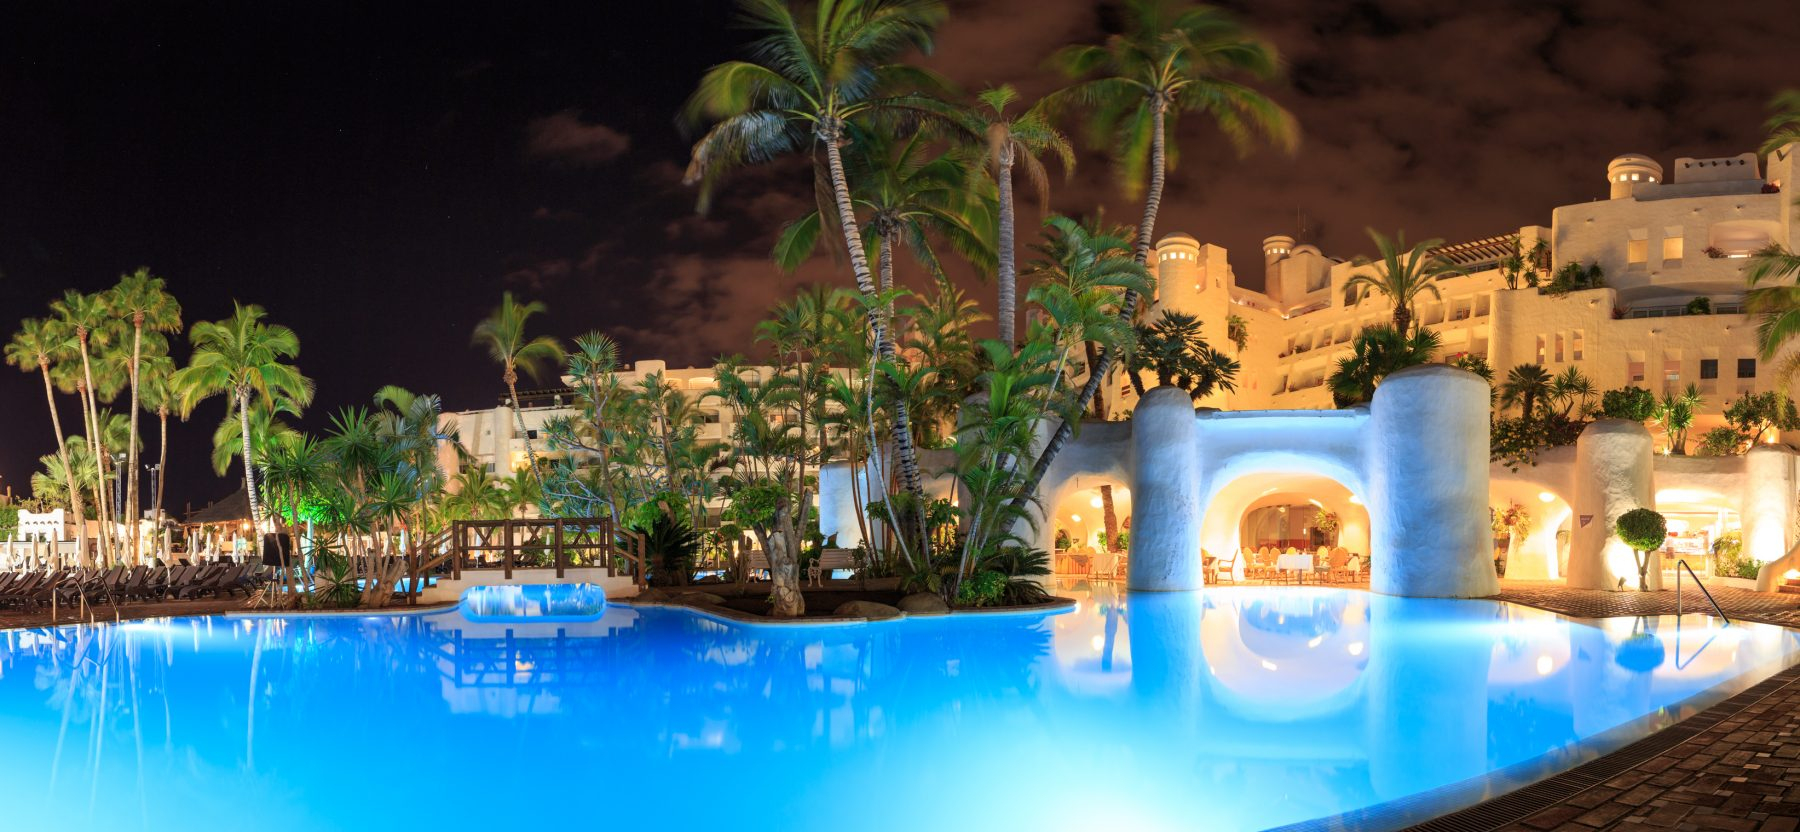 Jardín Tropical Hotel | My Way serapportantà Hotel Jardin Tropical Tenerife